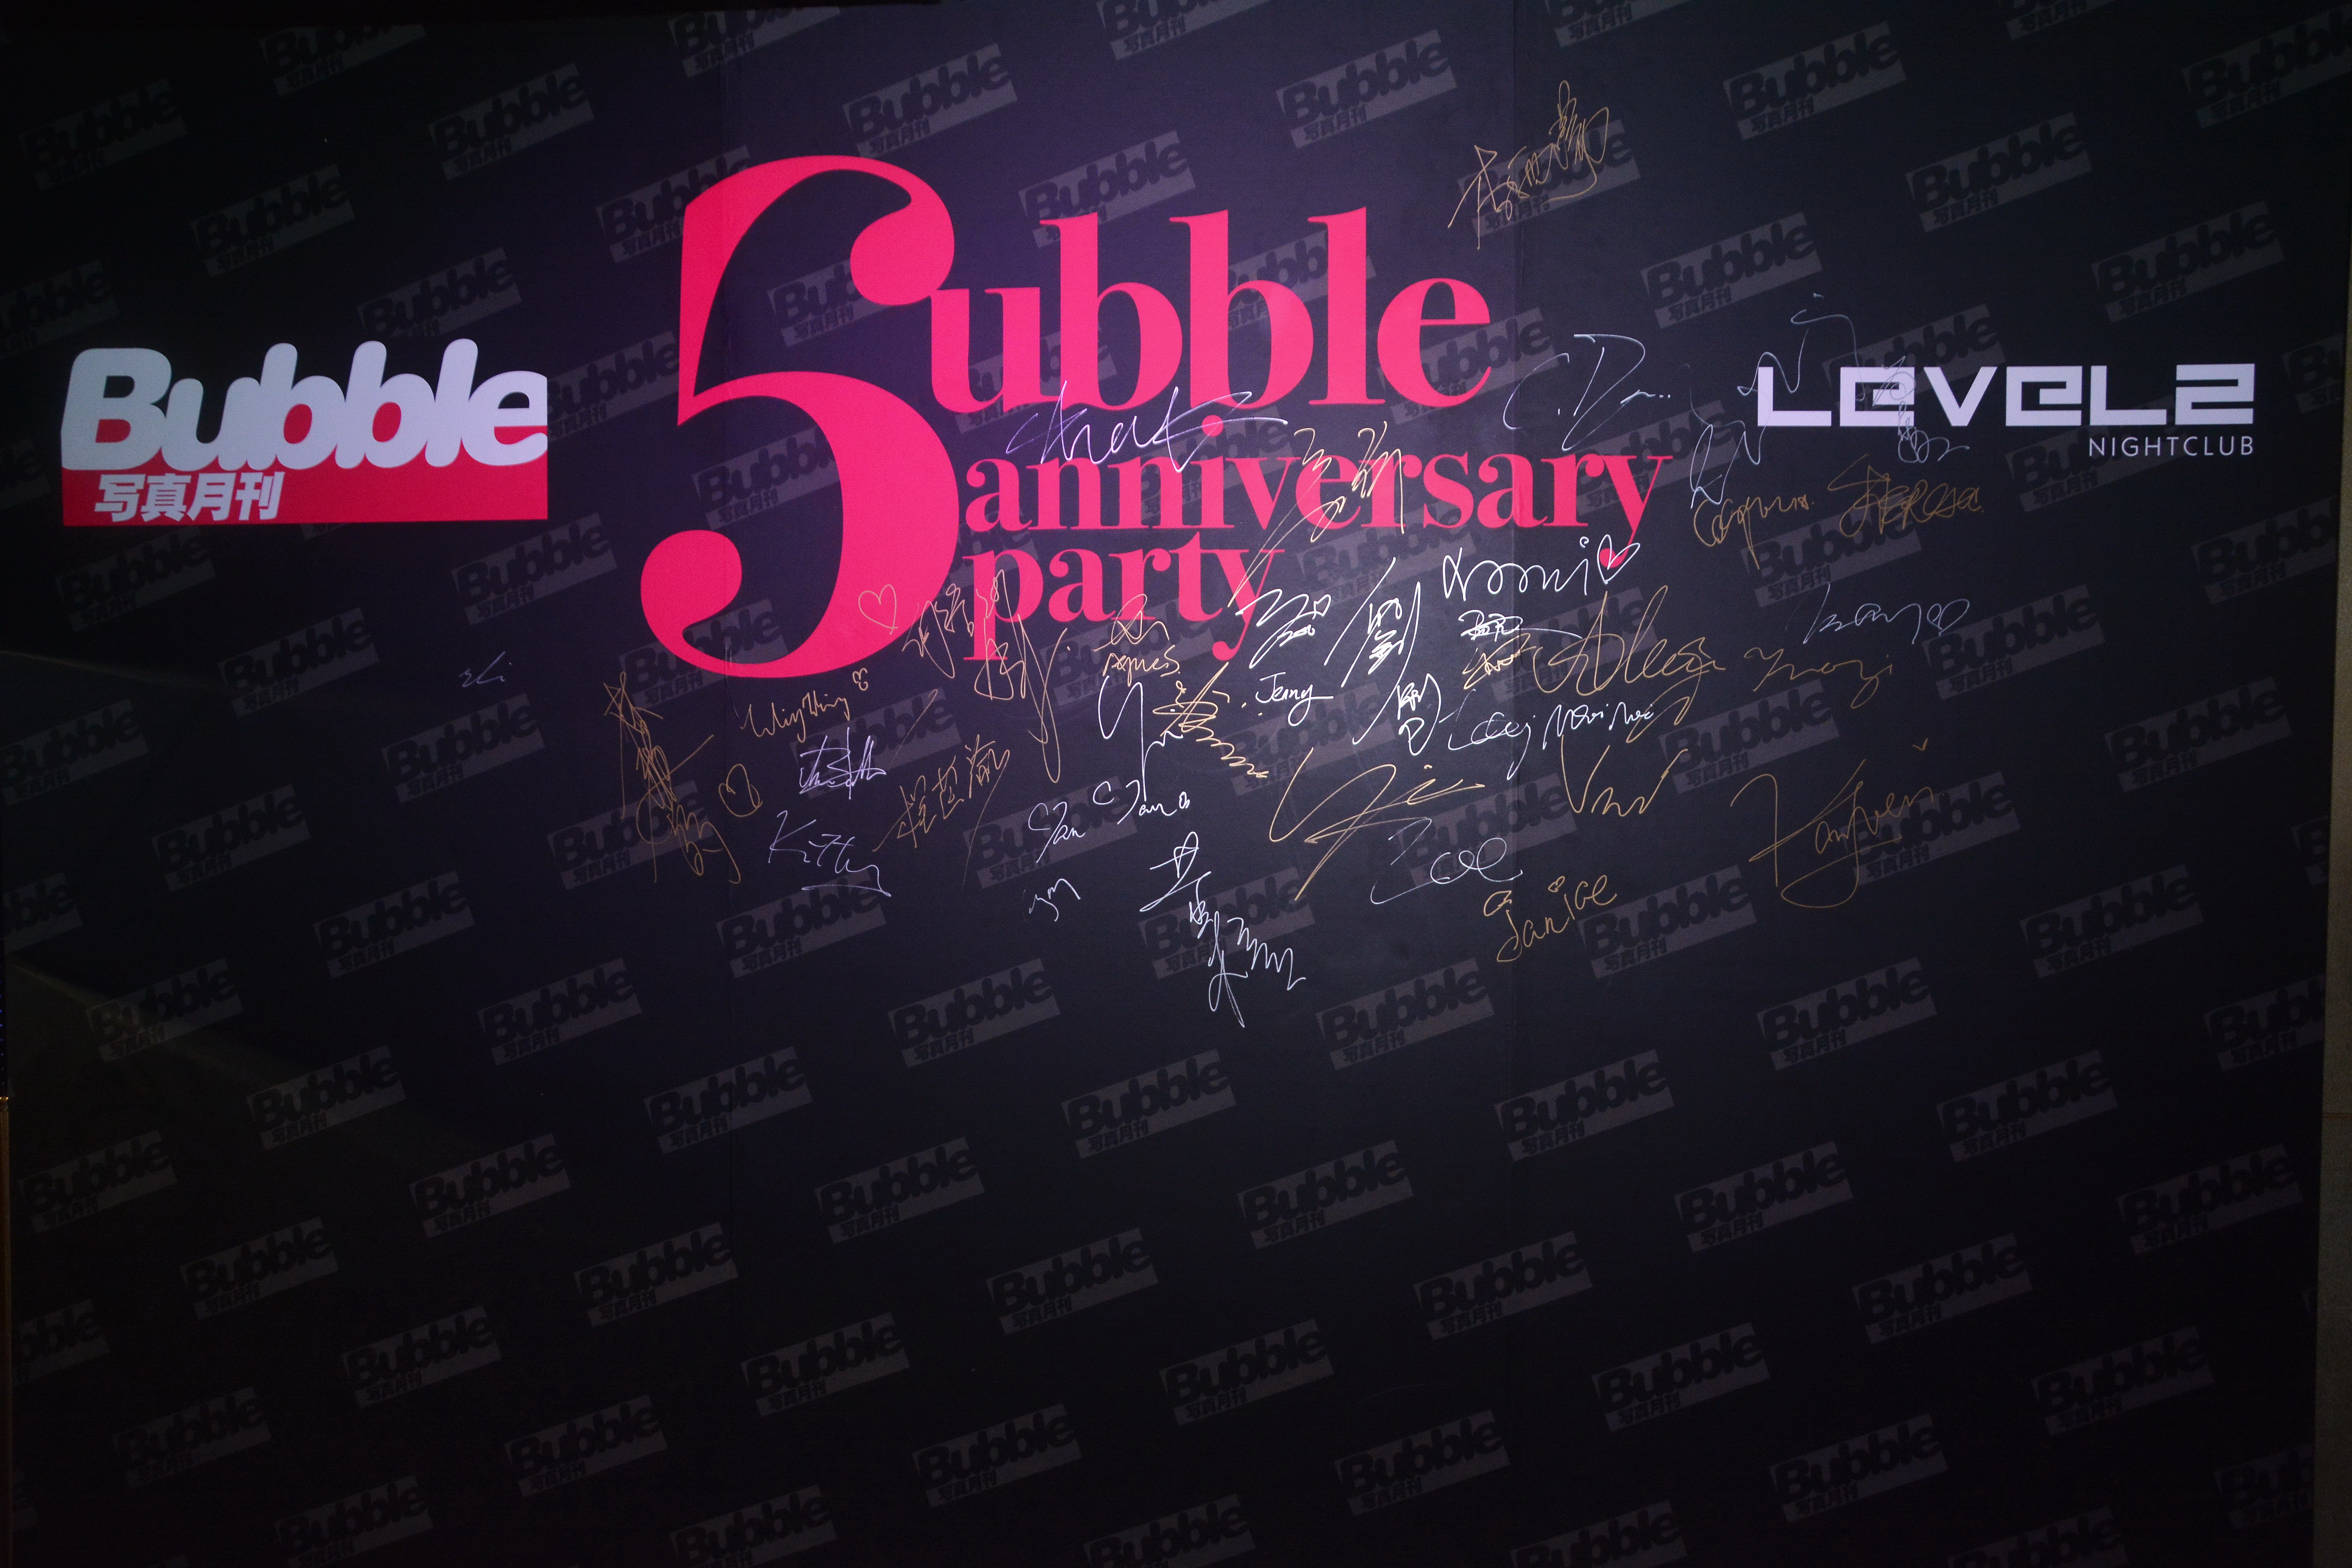 Chris Chan攝影師工作紀錄: Bubble寫真月刊5周年慶祝派對